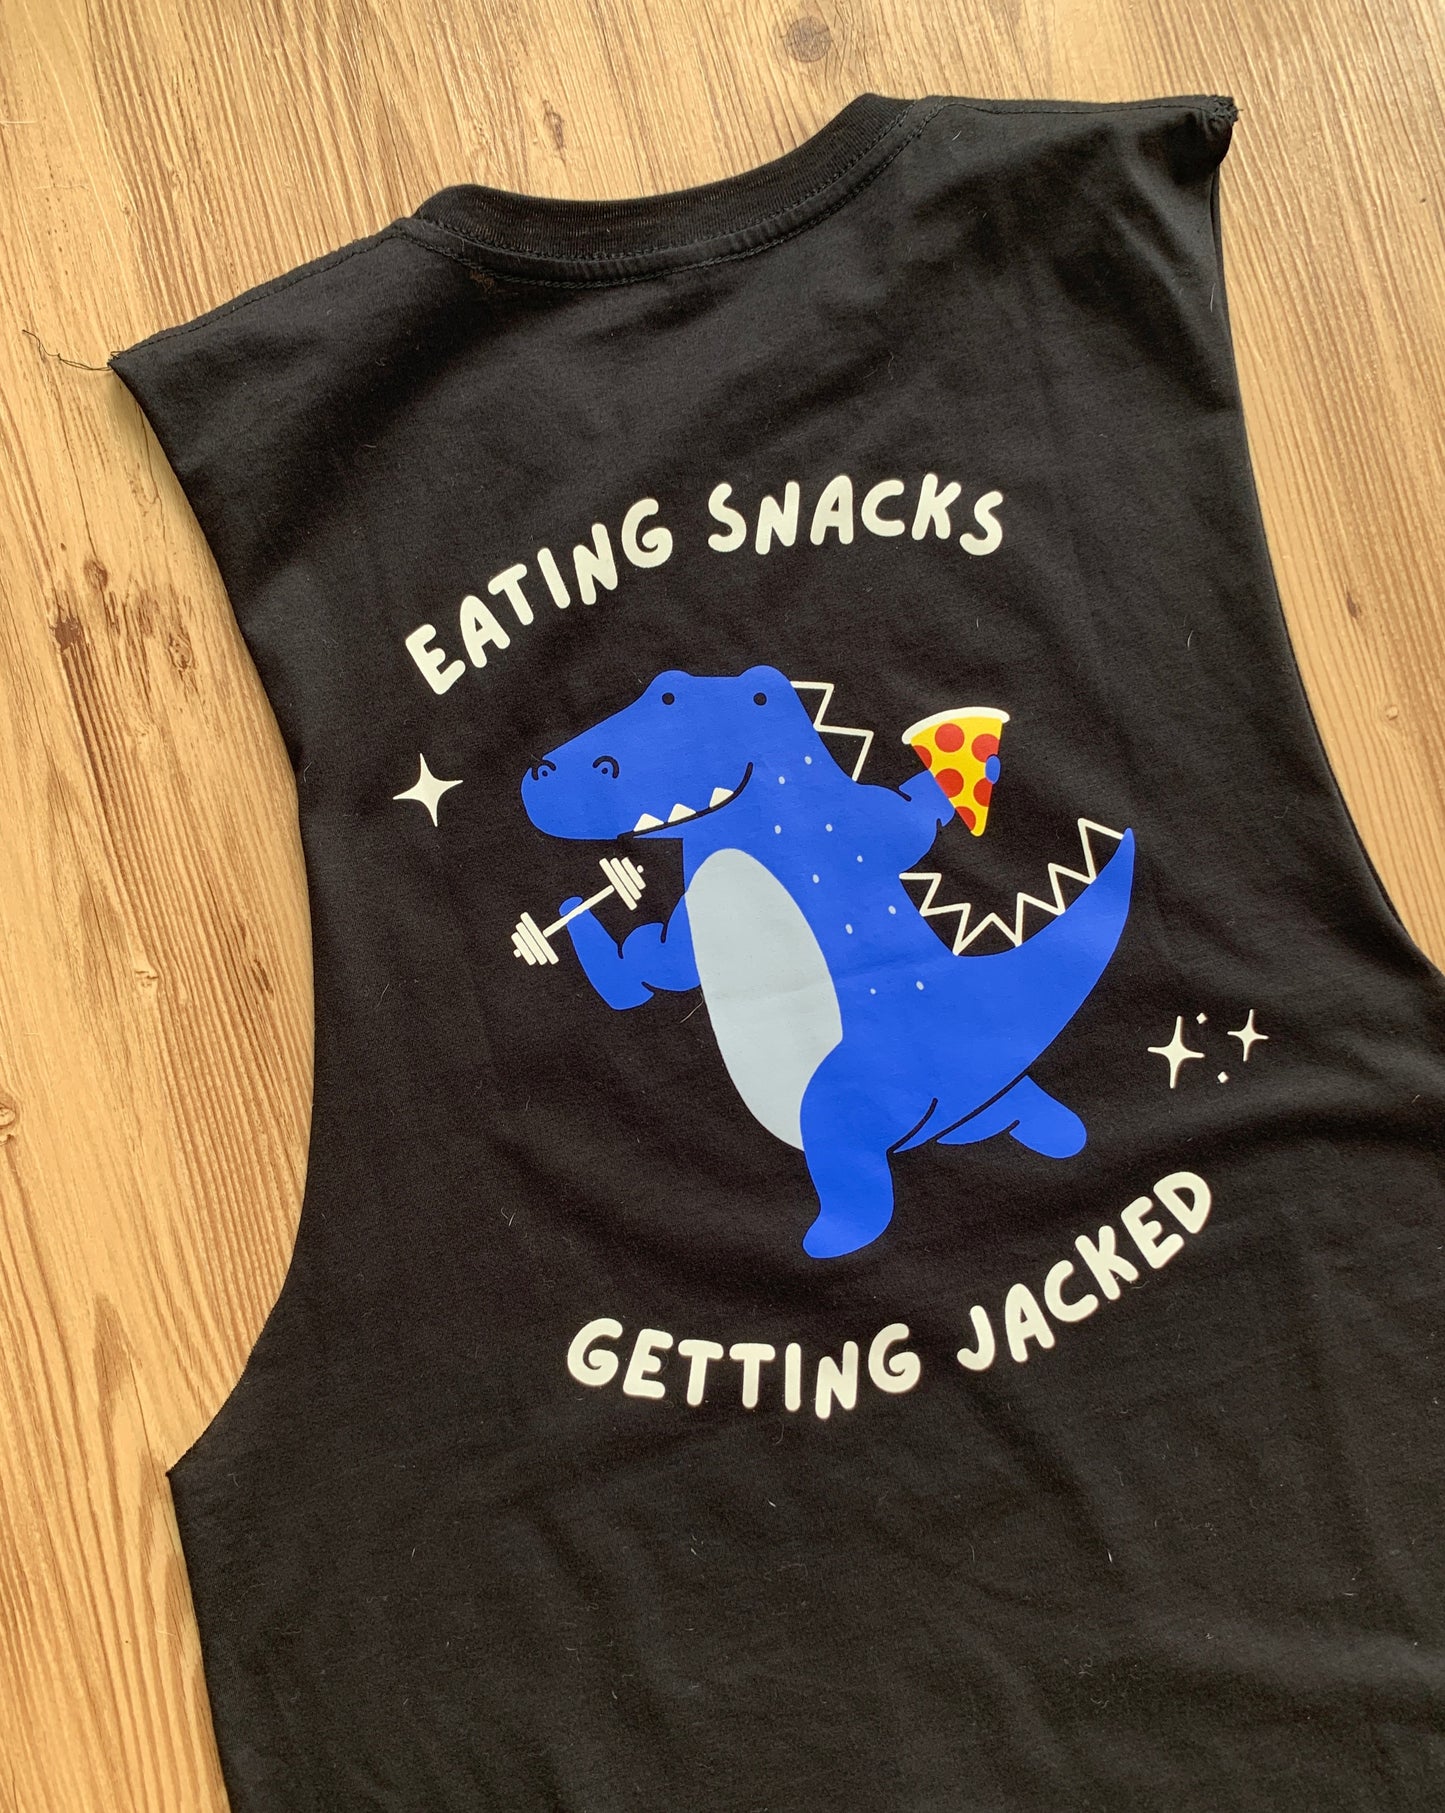 Eating snacks getting jacked muscle tank